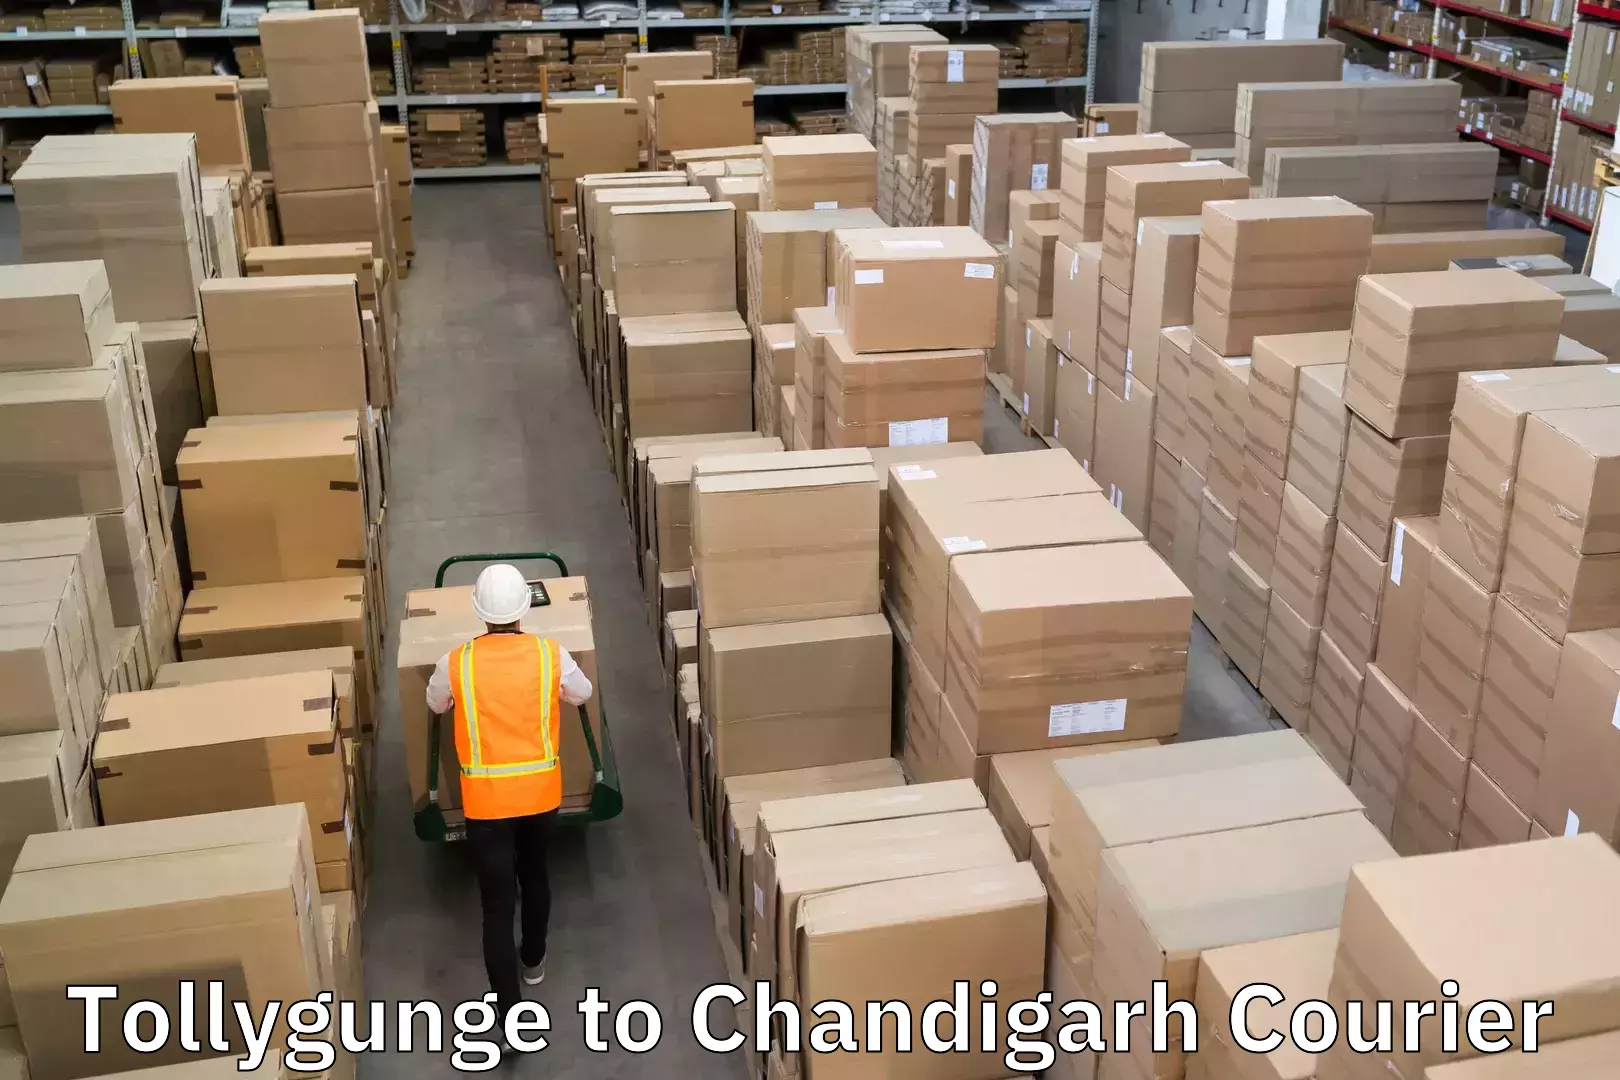 Doorstep delivery service Tollygunge to Chandigarh